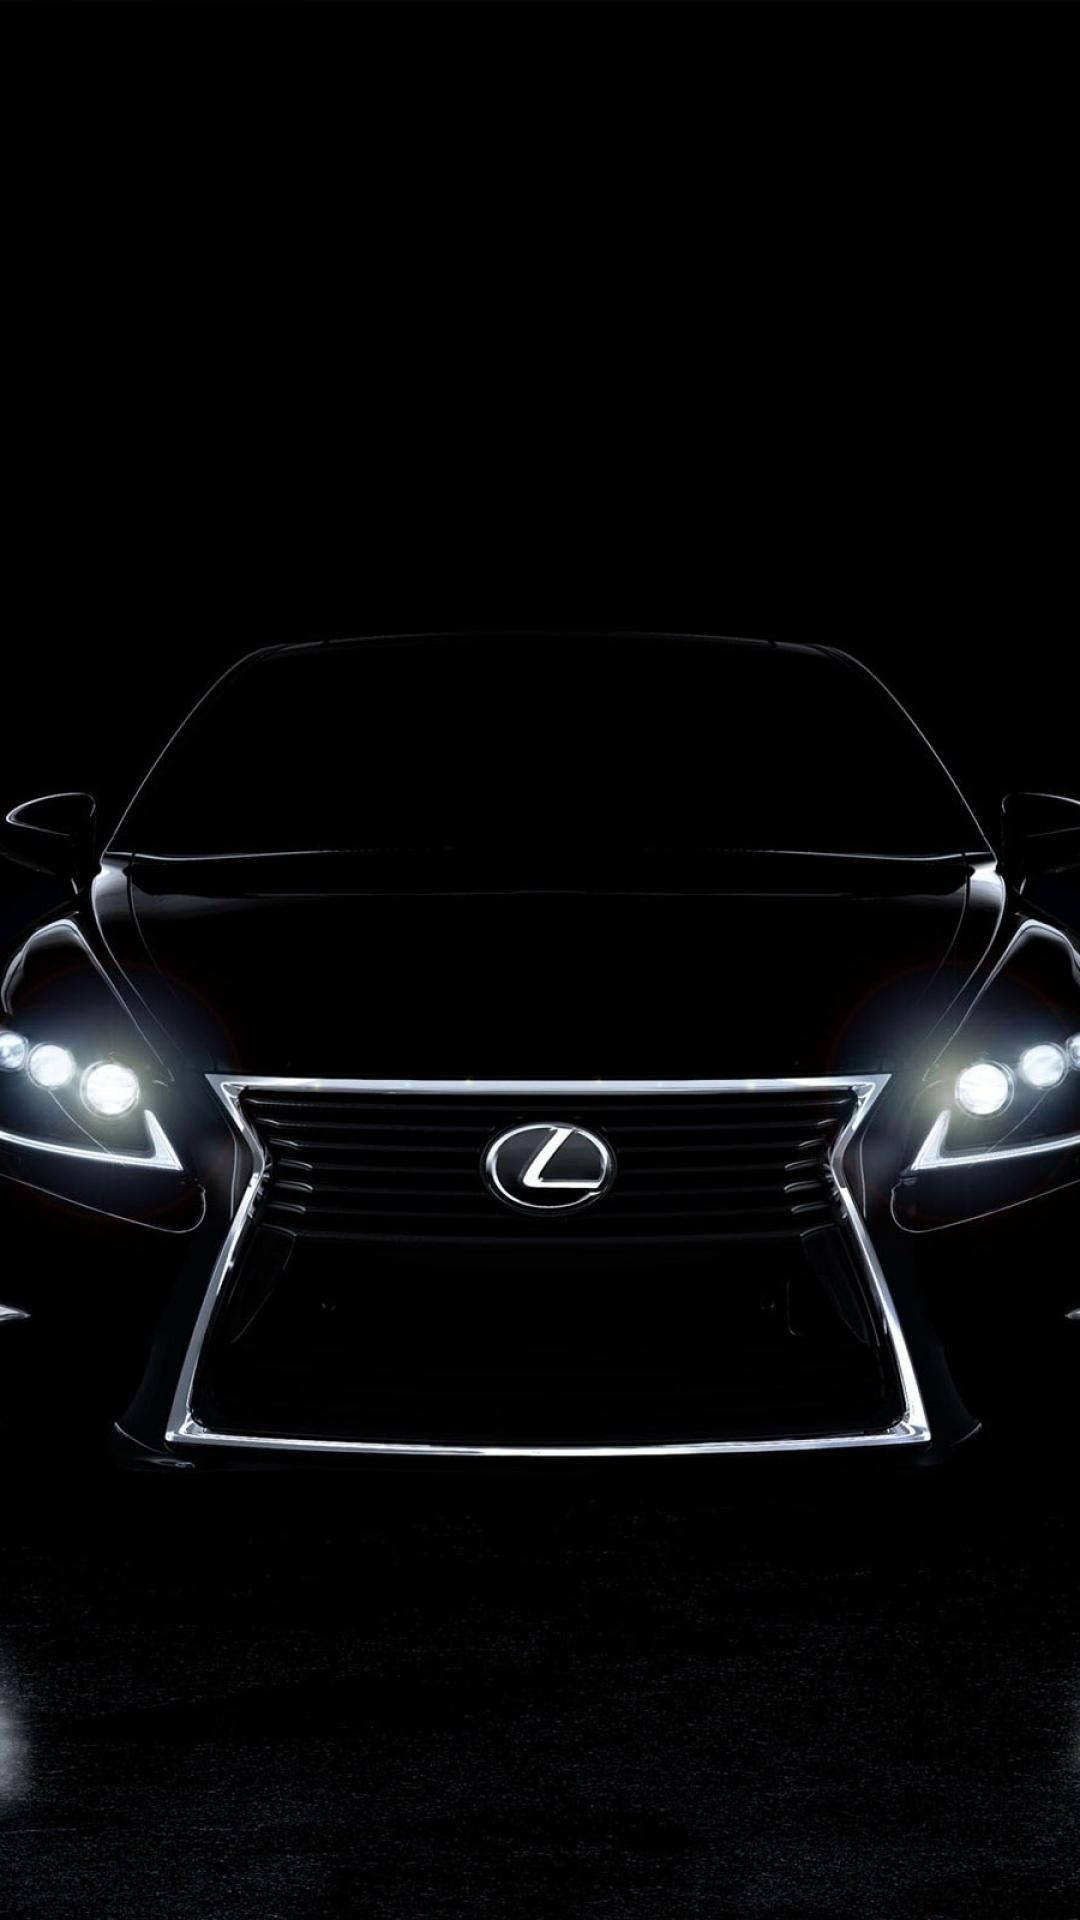 The Illuminated Emblem of Luxury - Lexus Logo Wallpaper